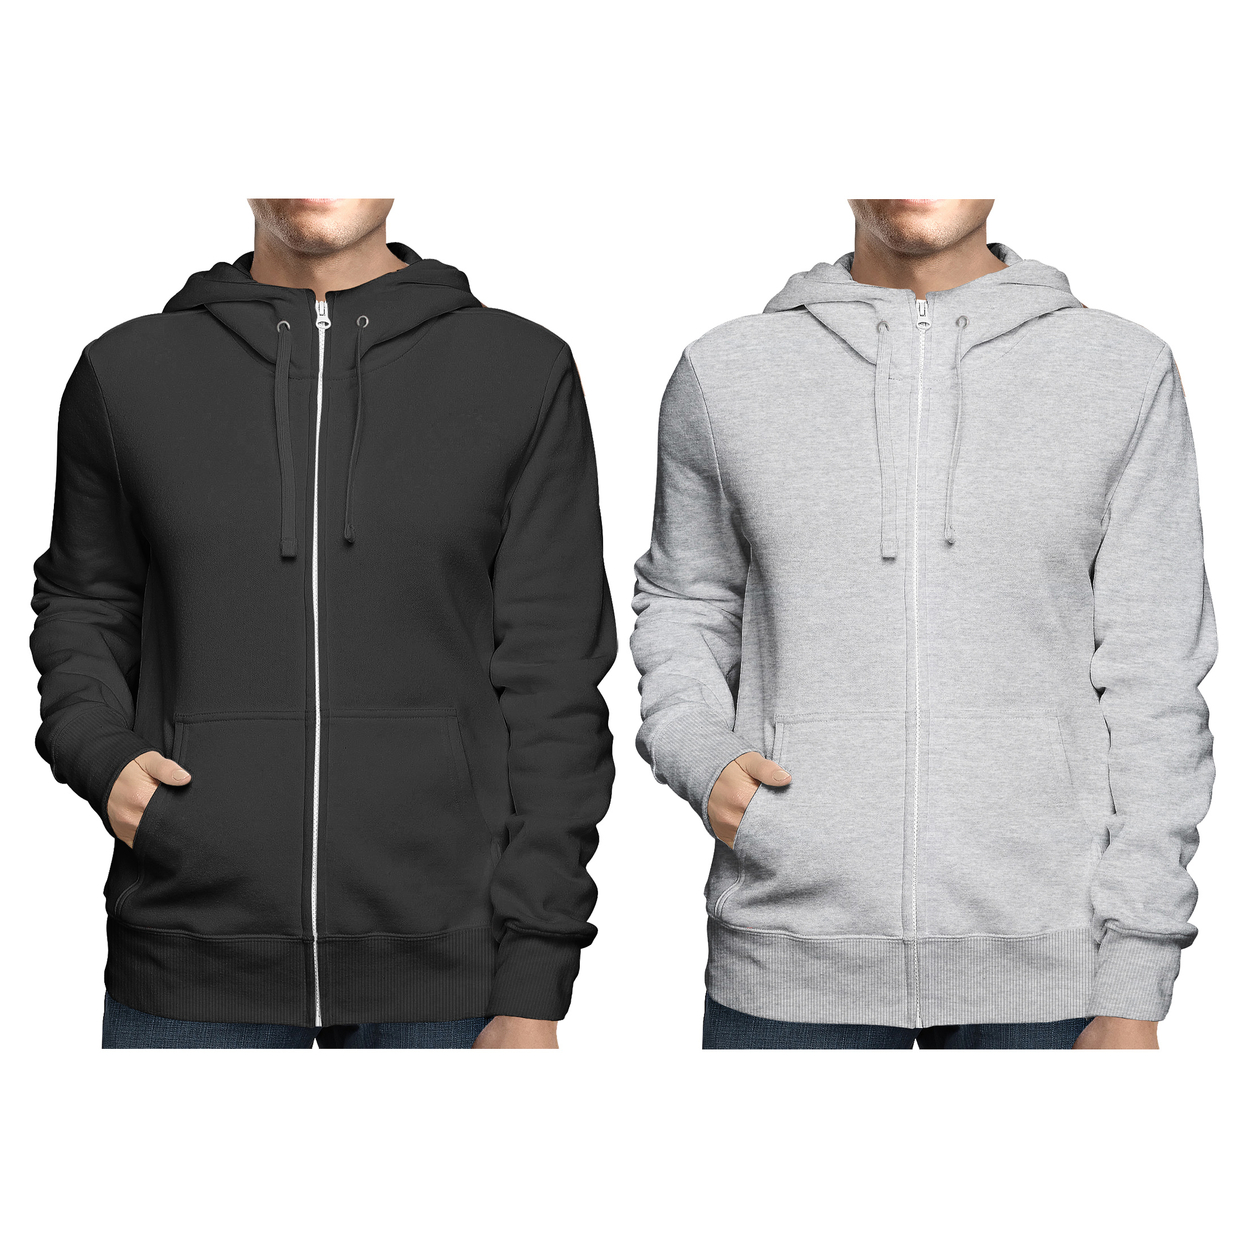 2-Pack: Men's Winter Warm Soft Full Zip-Up Fleece Lined Hoodie Sweatshirt - Black & Black, Small